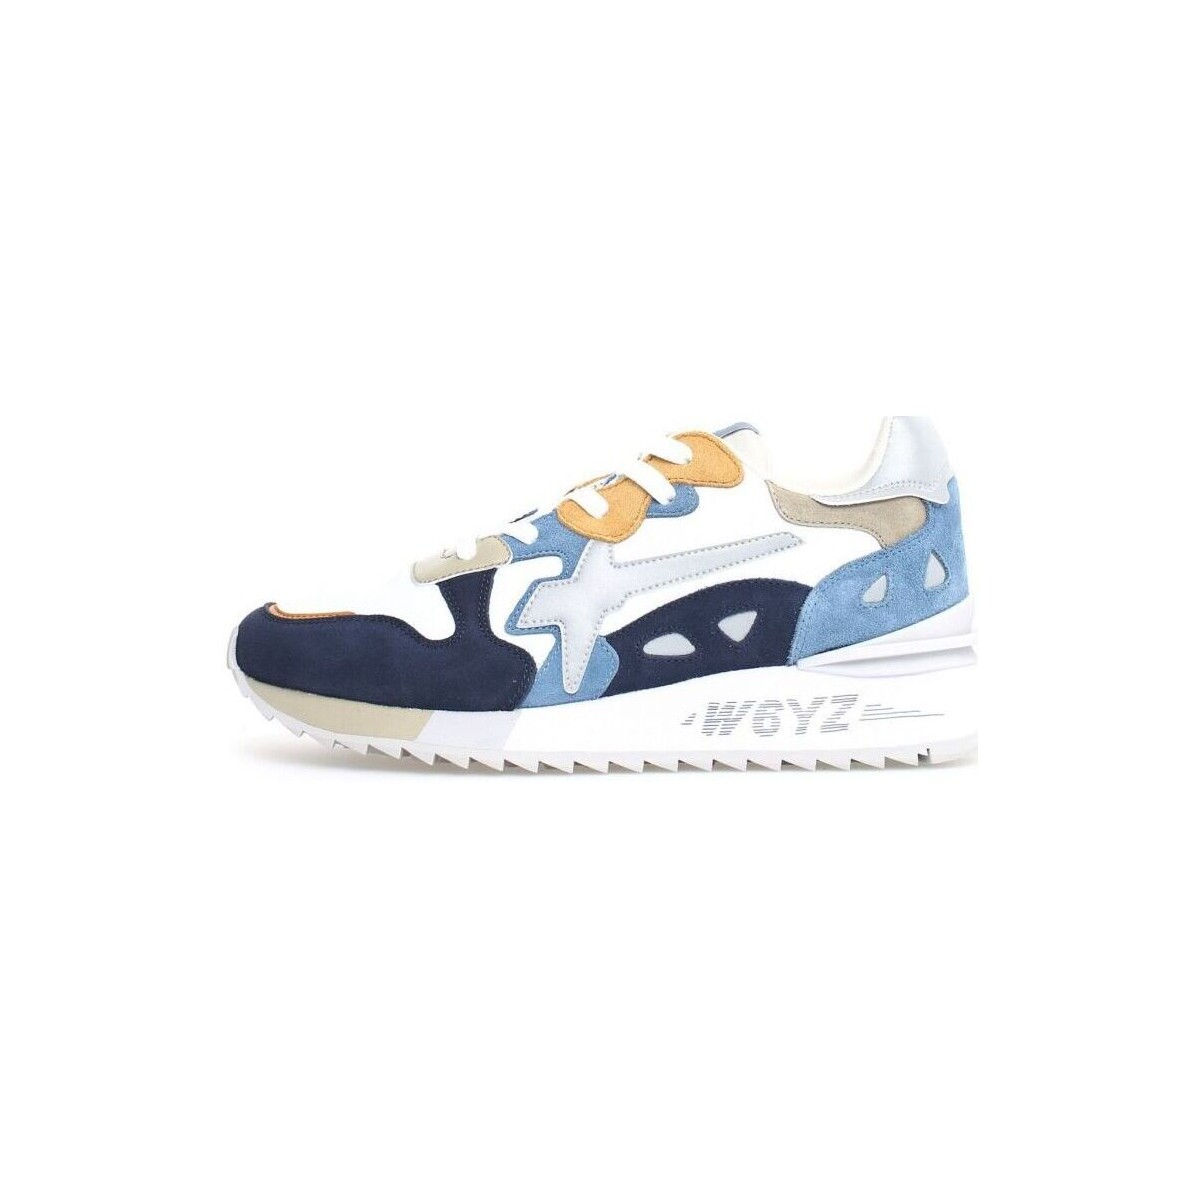 Sapatos Homem Sapatilhas W6yz MATCH 2018309-01 1C49-NAVY/WHITE/STONE Azul